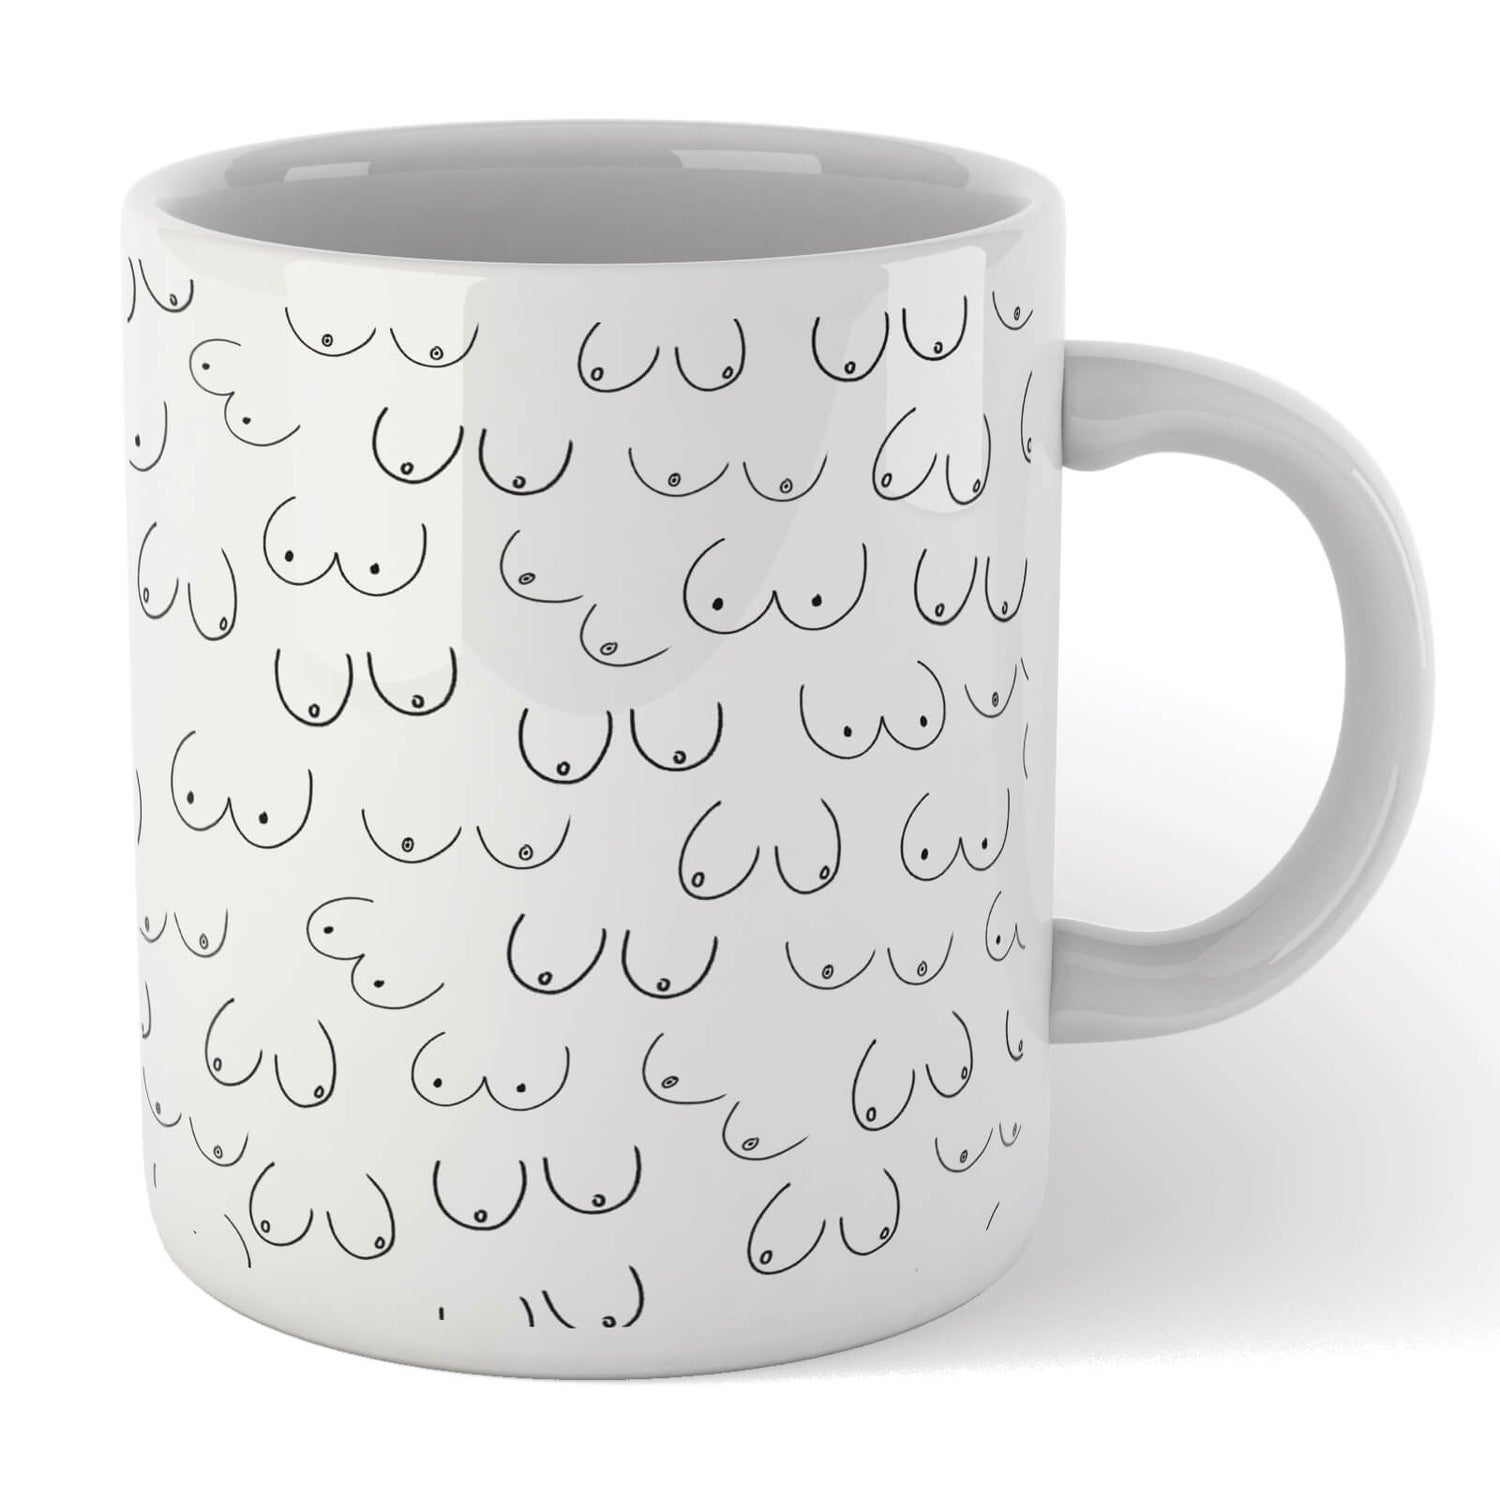 Buy Boobie Boobs Mug Ceramic Coffee Cup Water Juice Cups (Boobs